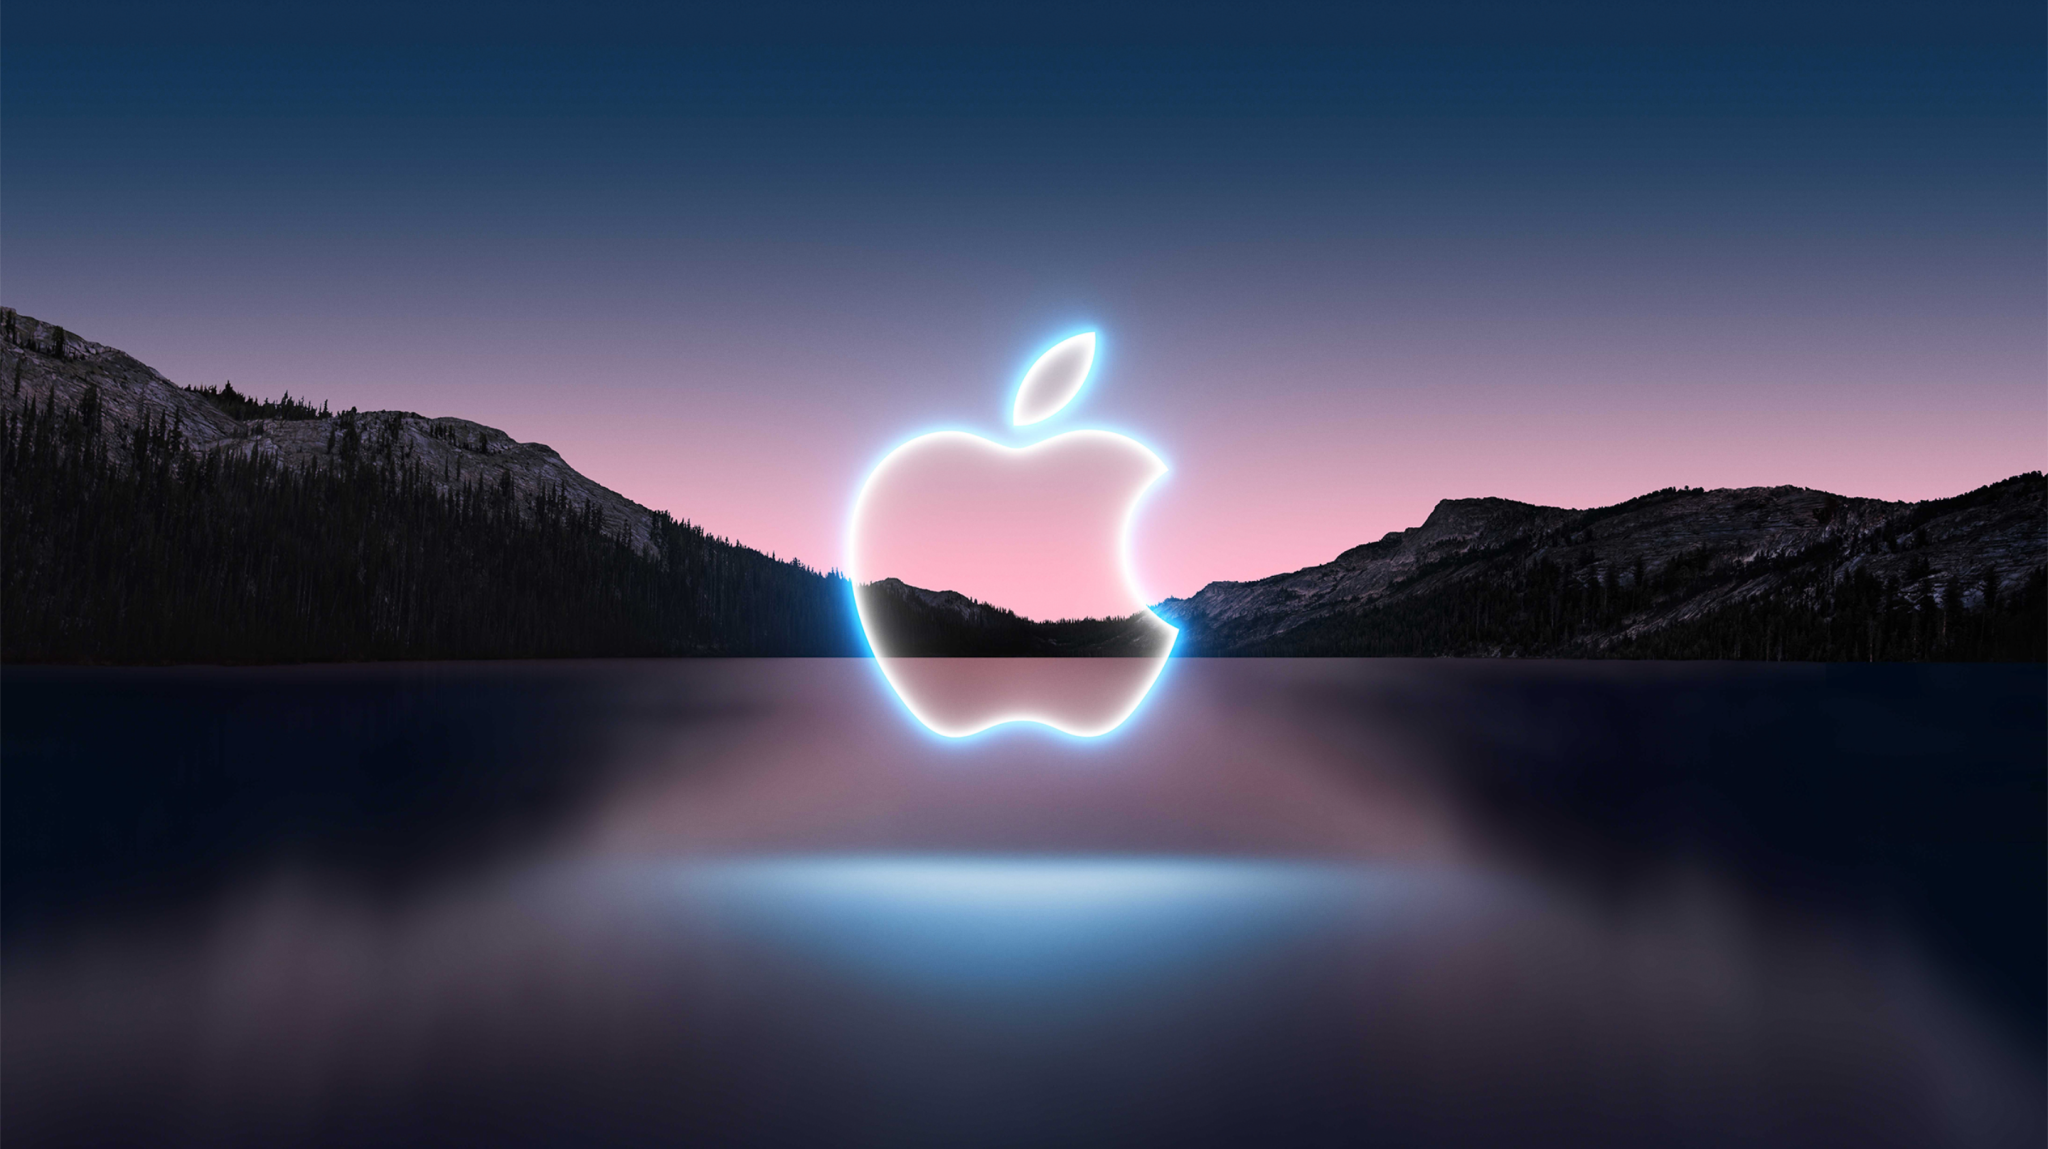 Apple is releasing iOS 15 on September 20